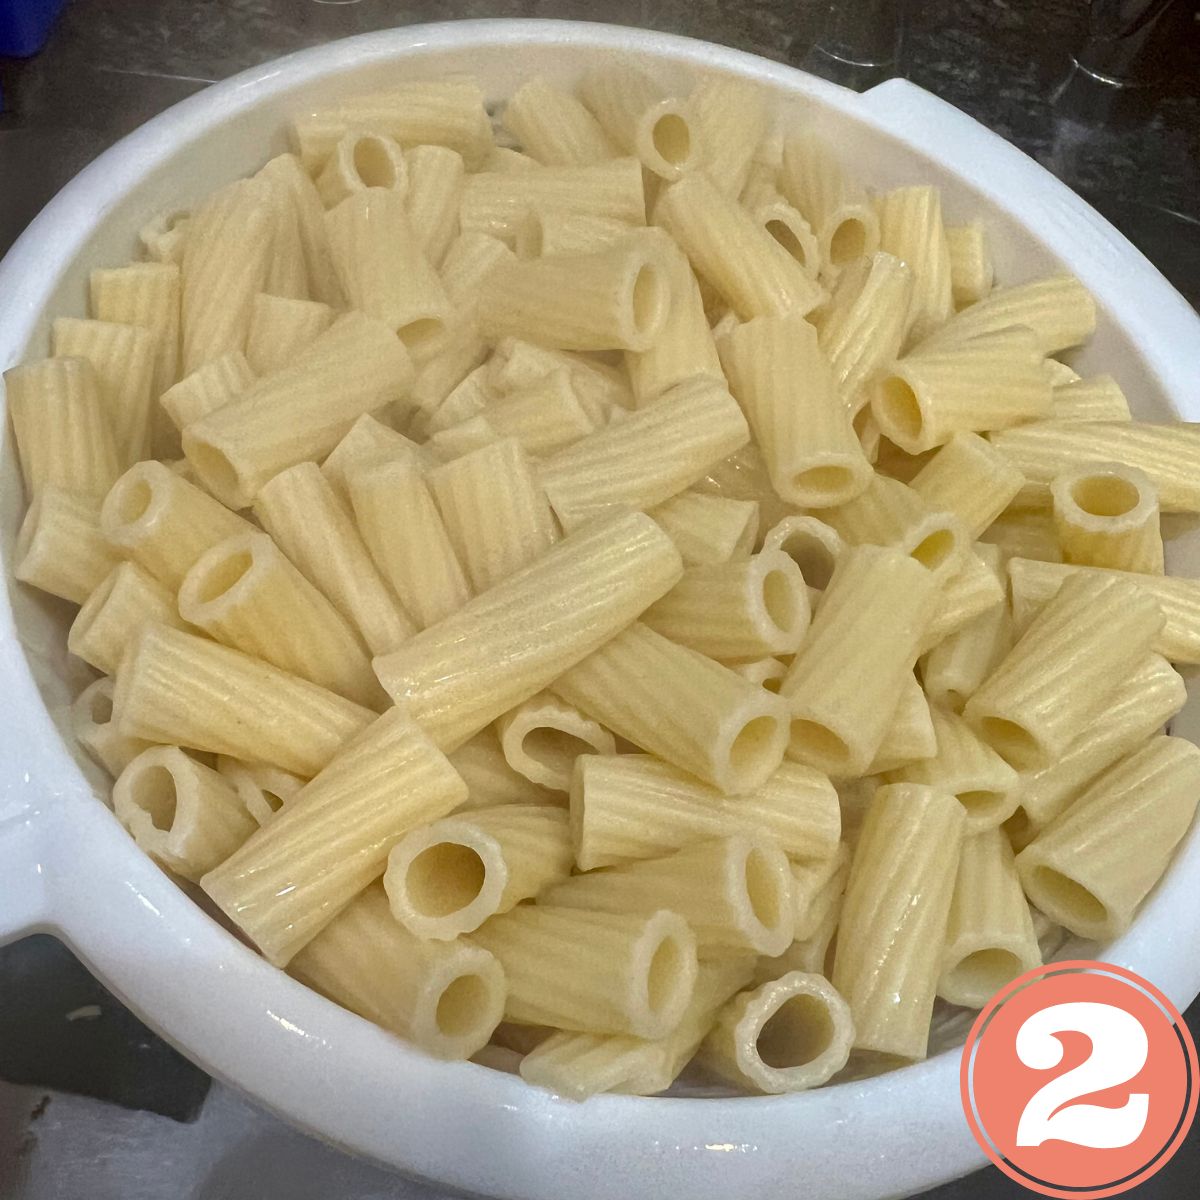 Ziti pasta being strained in a white colander